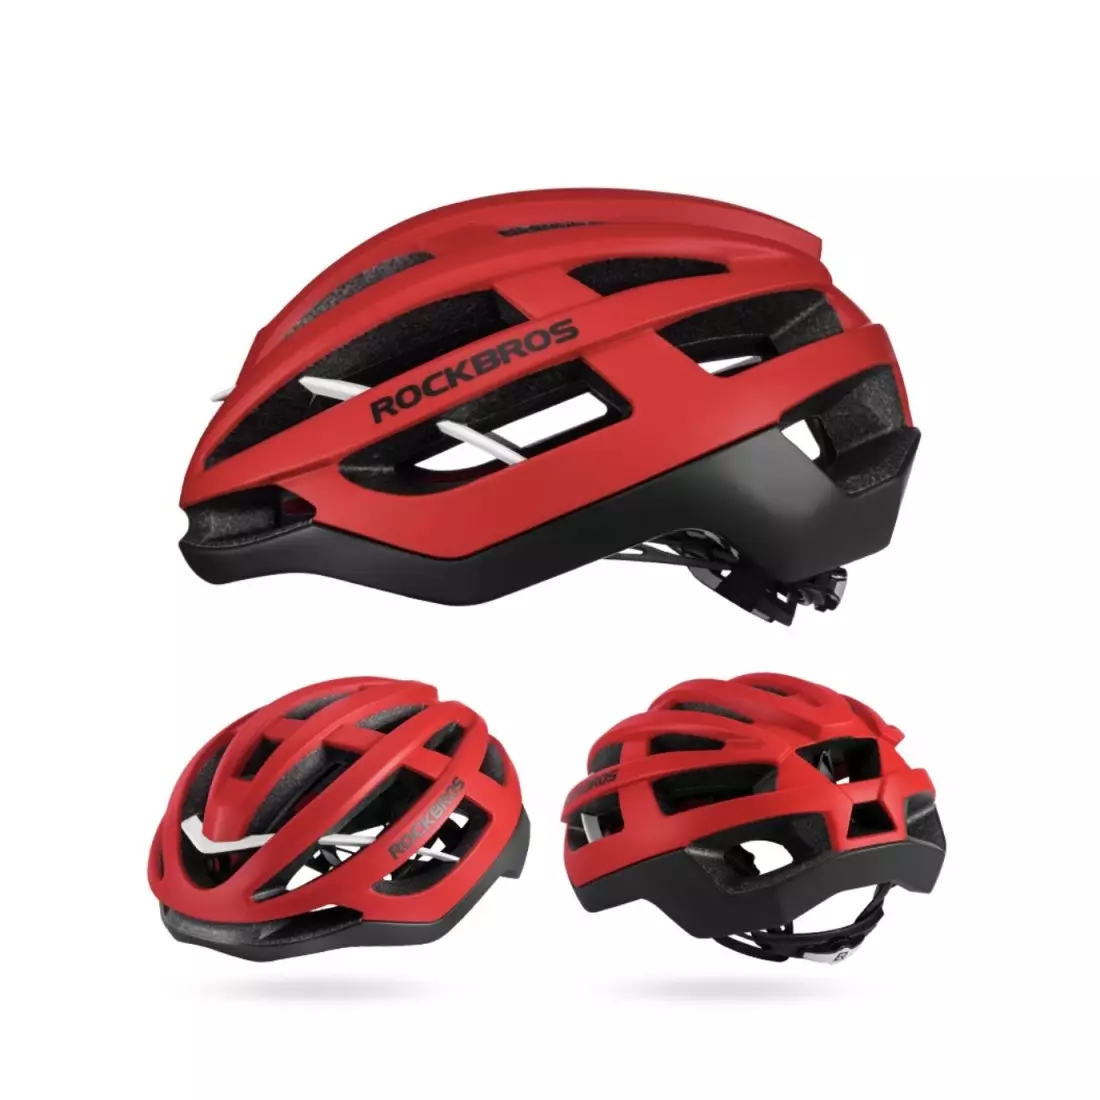 Rockbros Road bike helmet, red HC-58RB